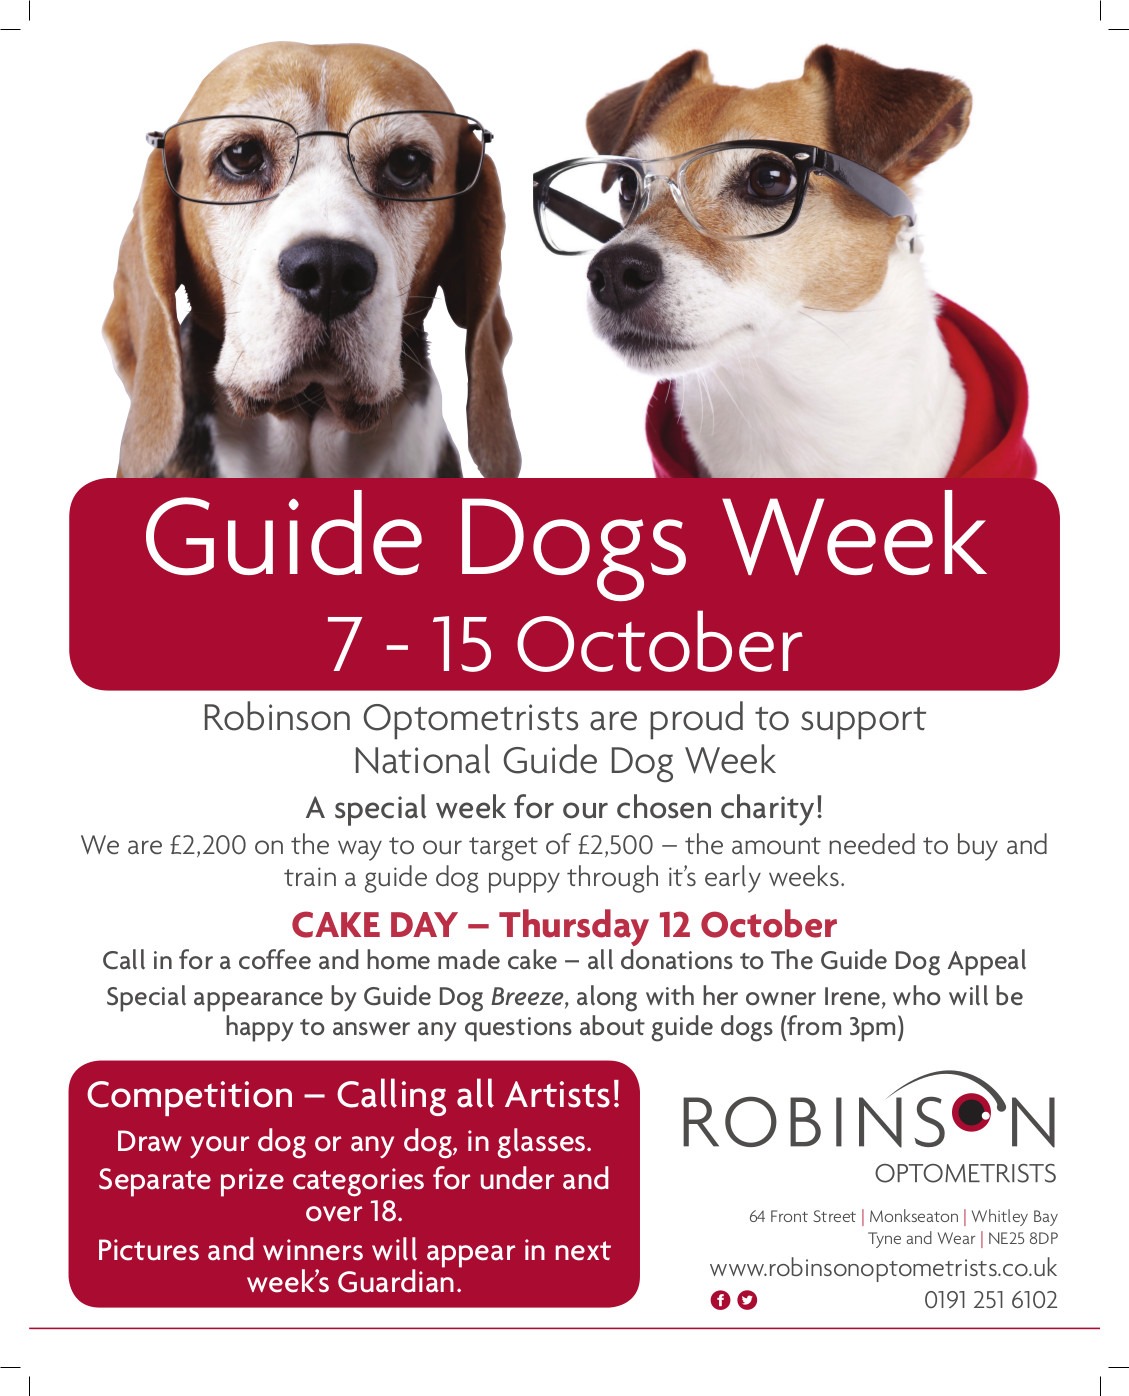 Guide Dogs Week at Robinson Optometrists, Monkseaton